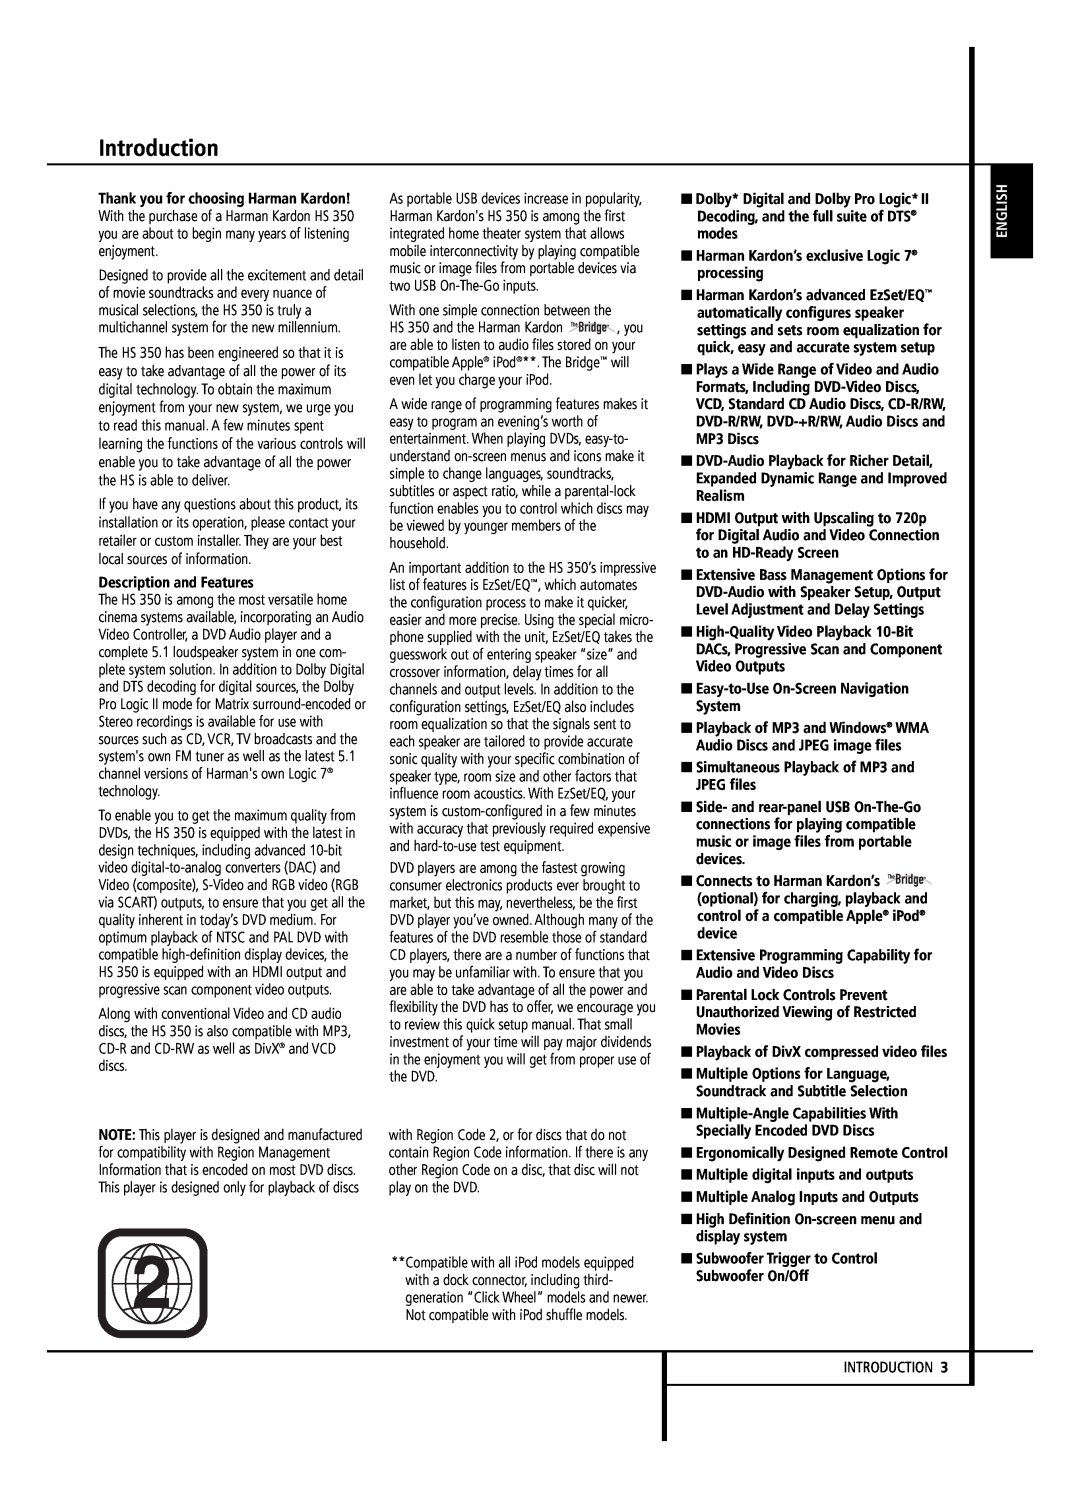 Harman-Kardon HS 350 owner manual Introduction, English 